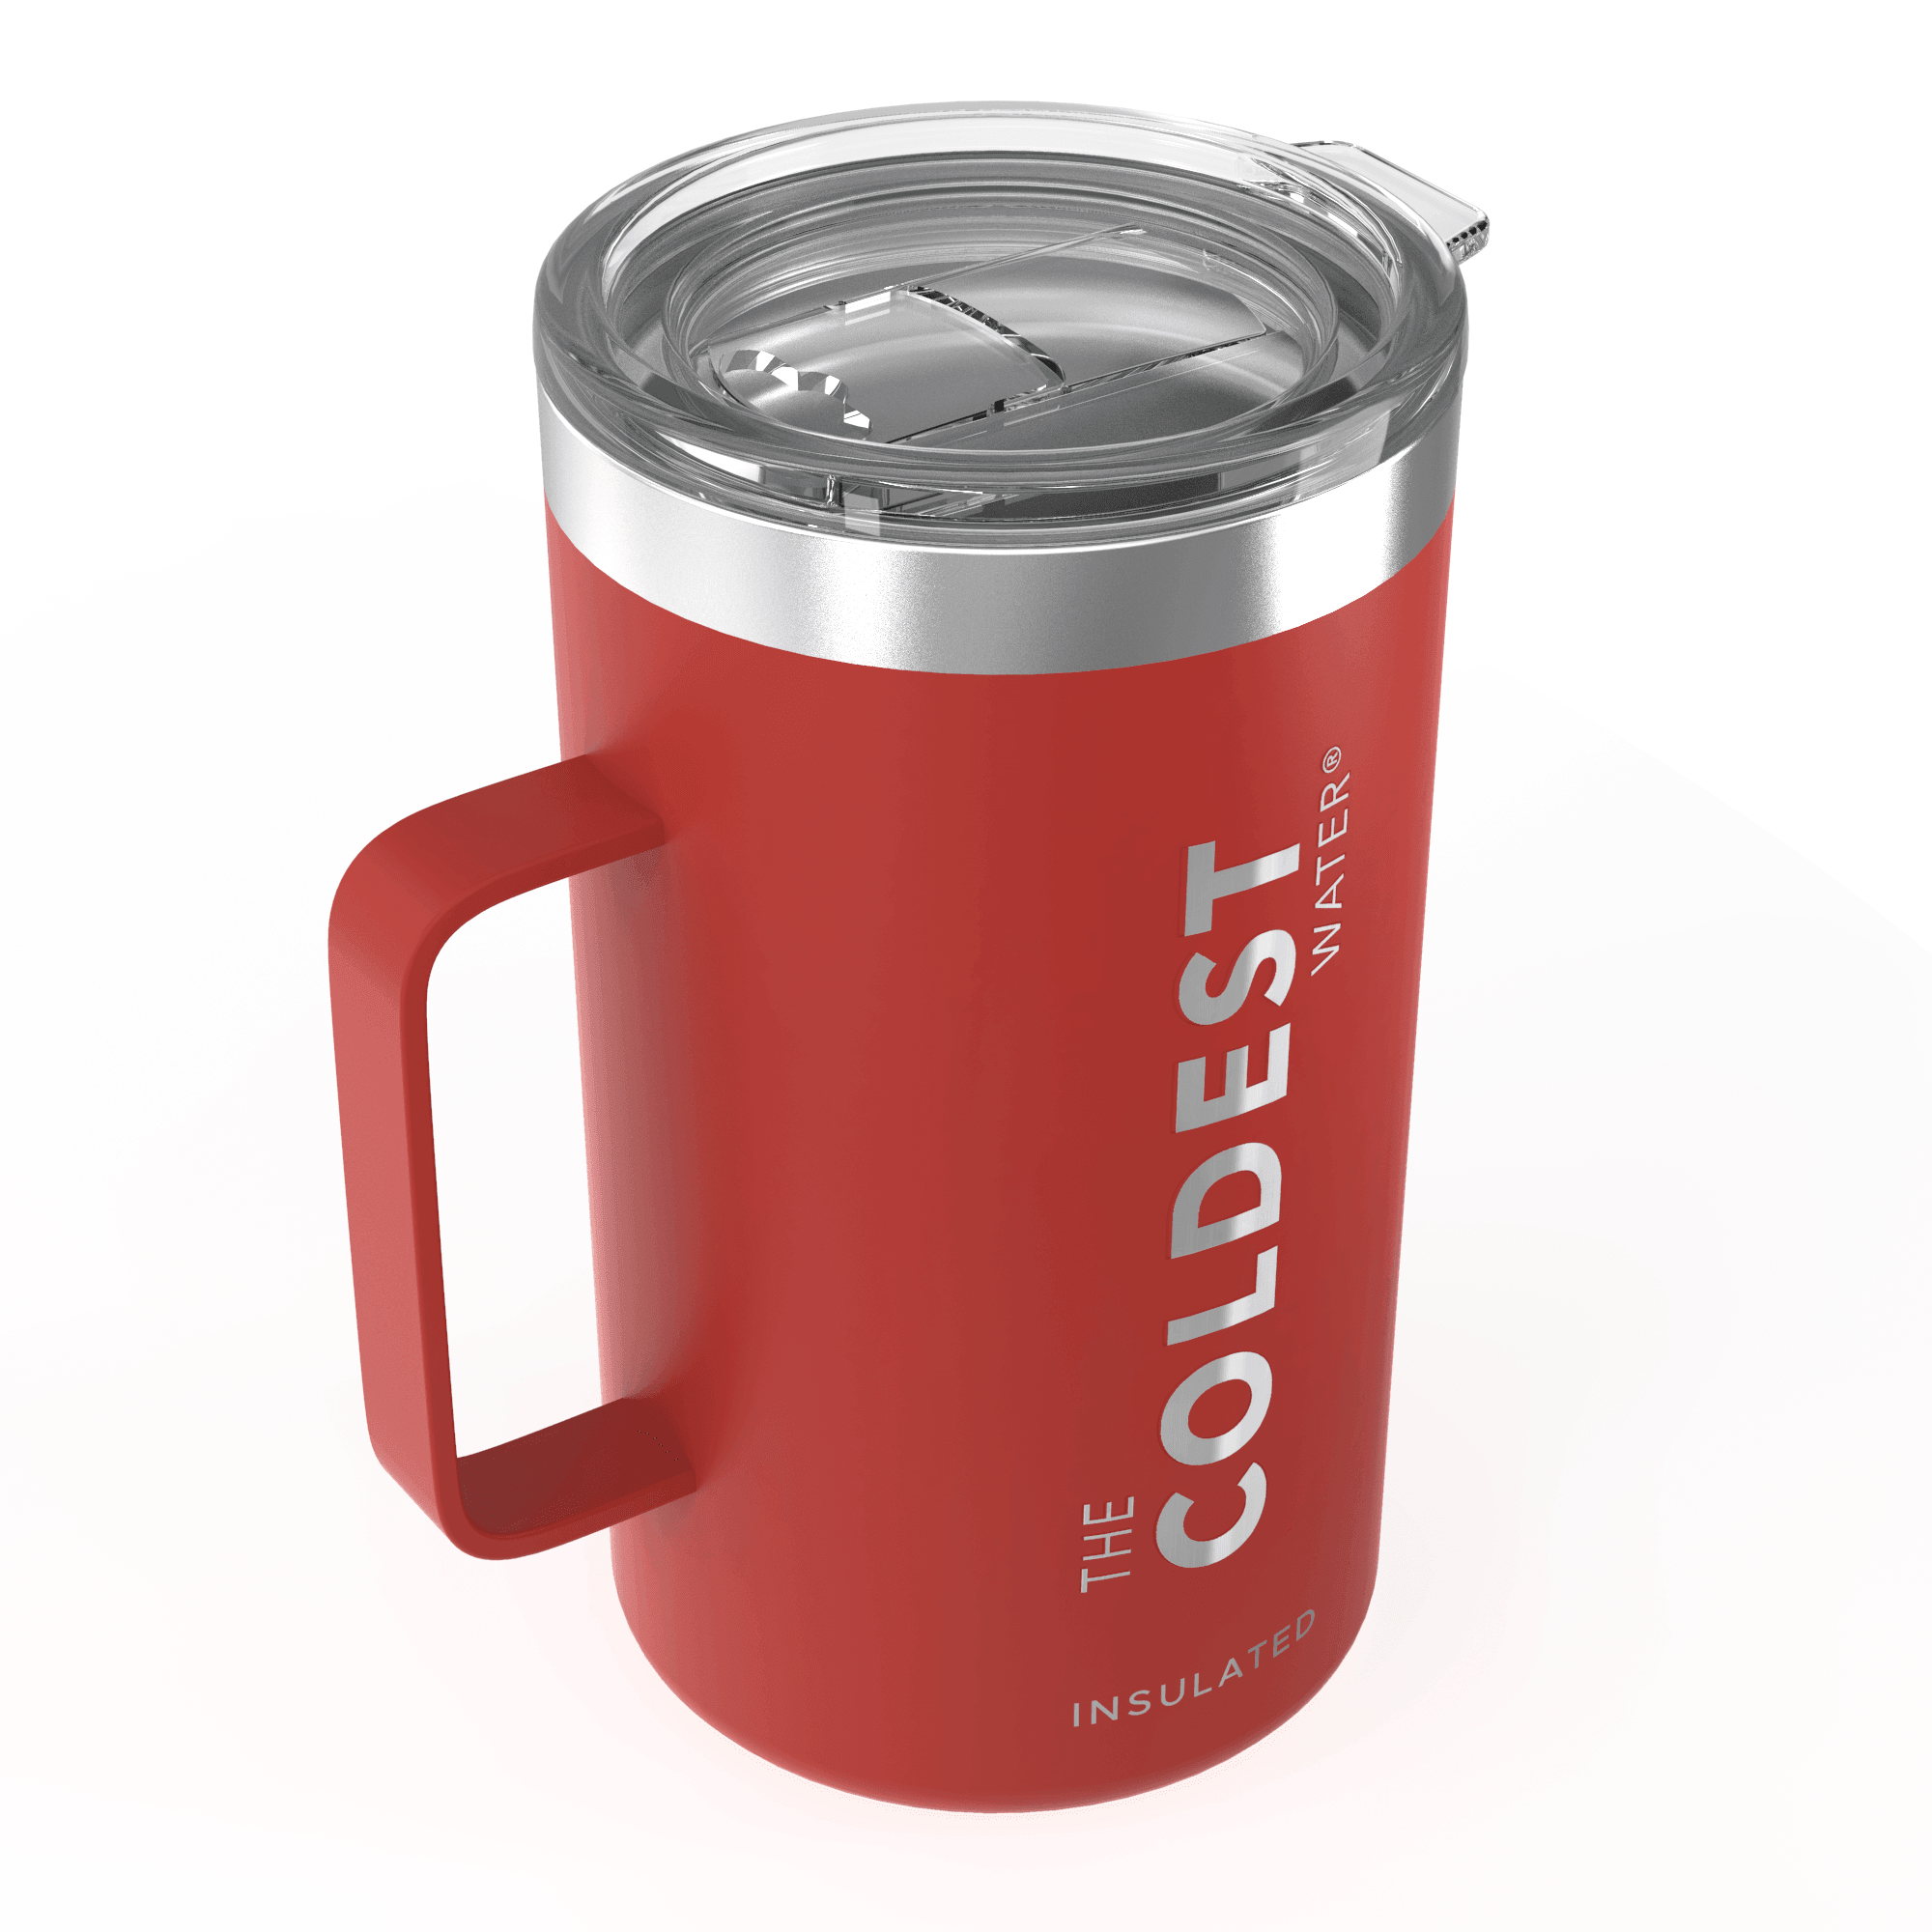 The Coldest Coffee Mug - Super Insulated Travel Mug for Hot & Cold Drinks  24 oz